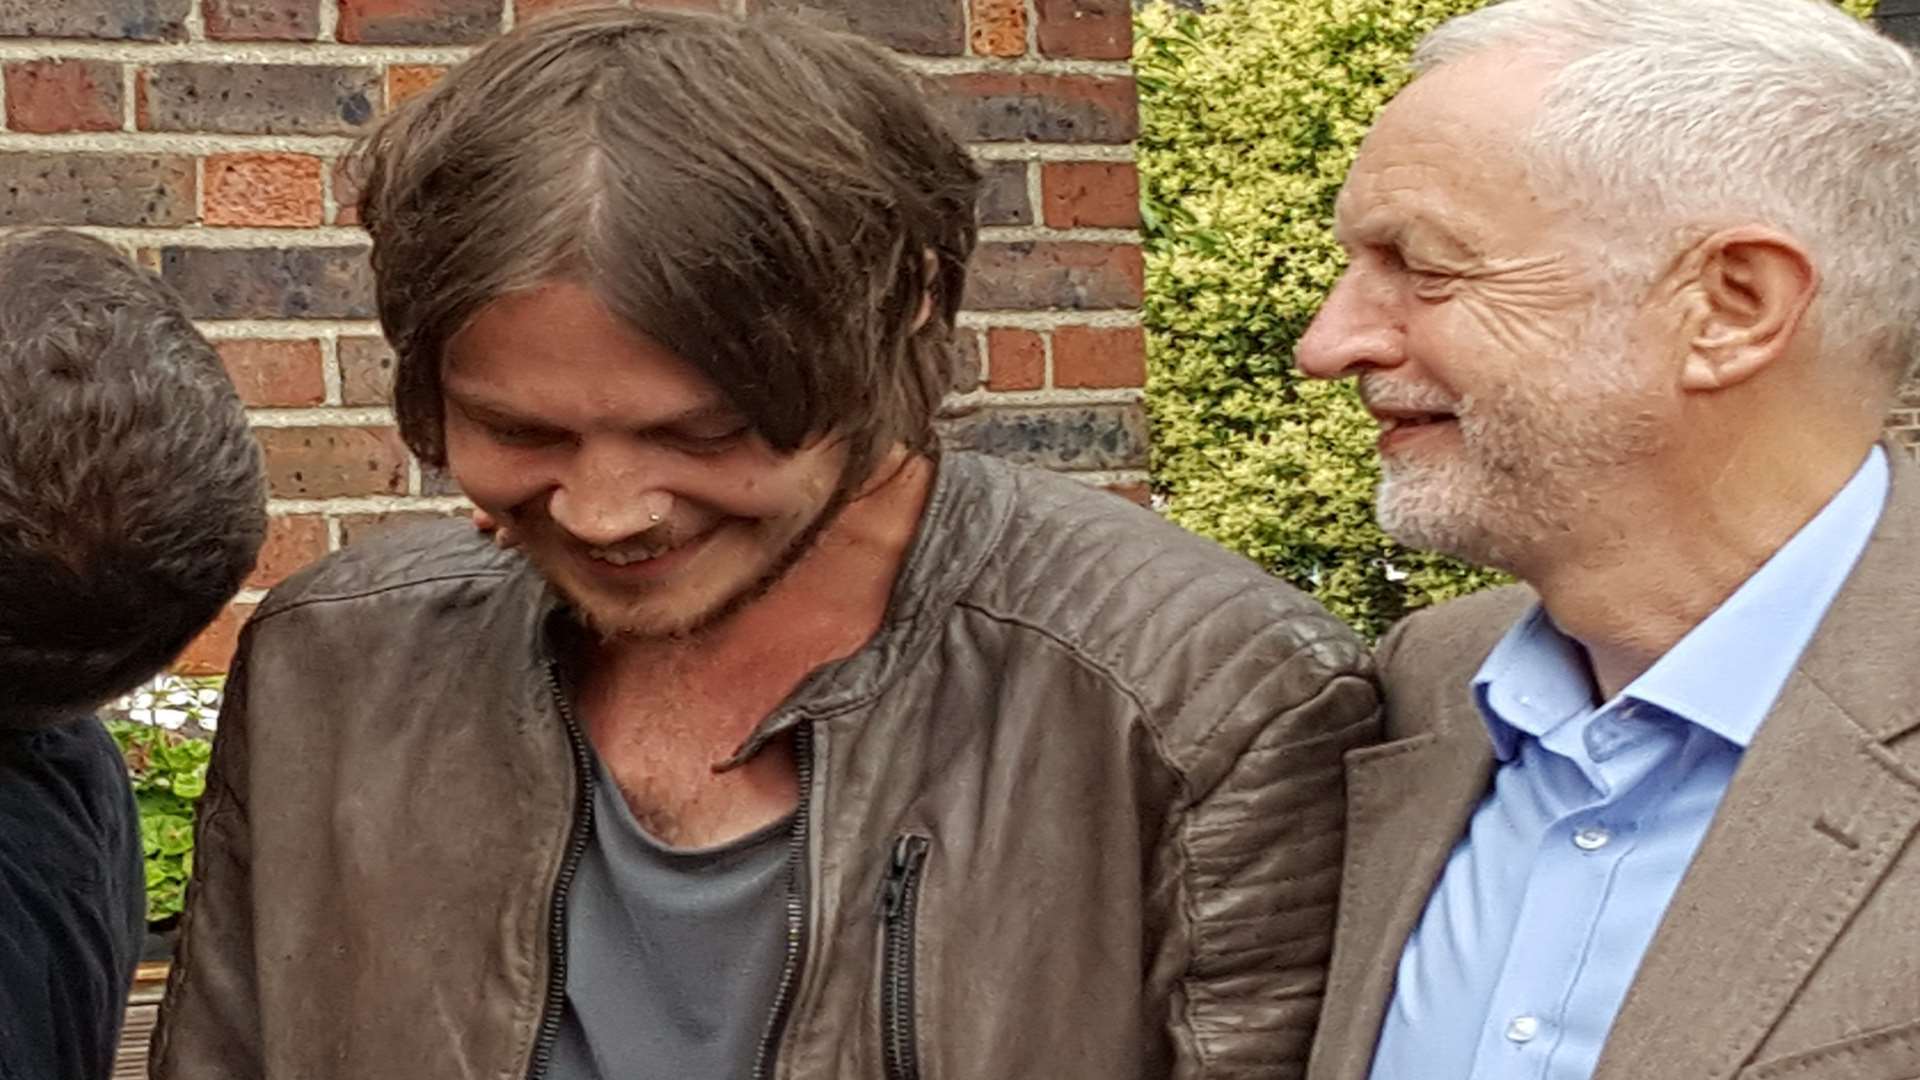 Sam Collins met Jeremy Corbyn at the portrait unveiling